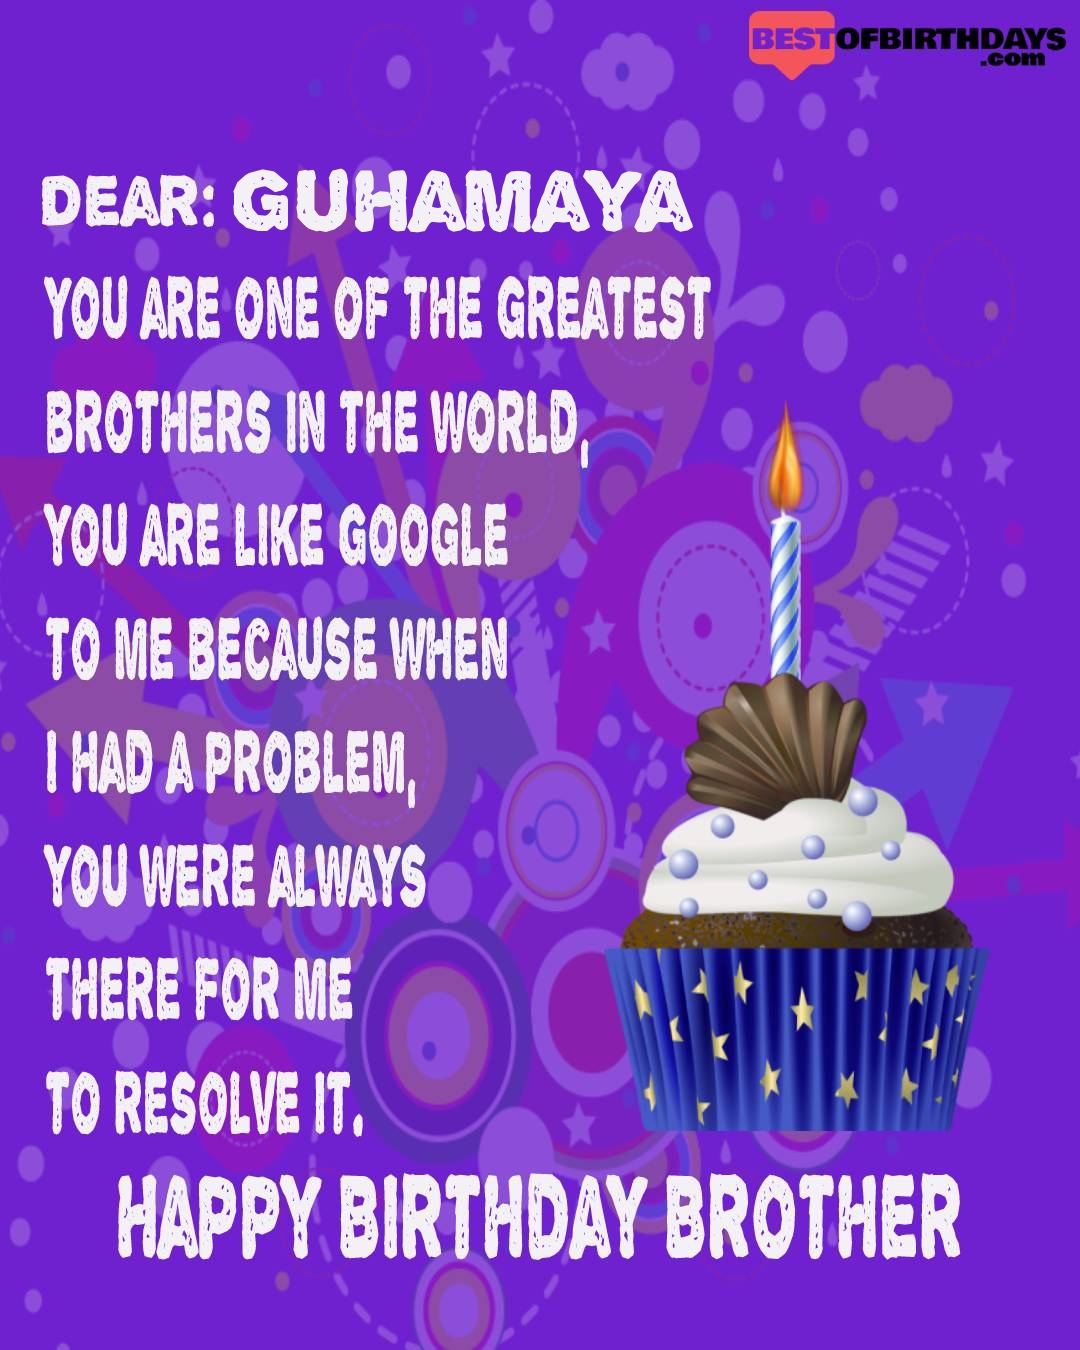 Happy birthday guhamaya bhai brother bro